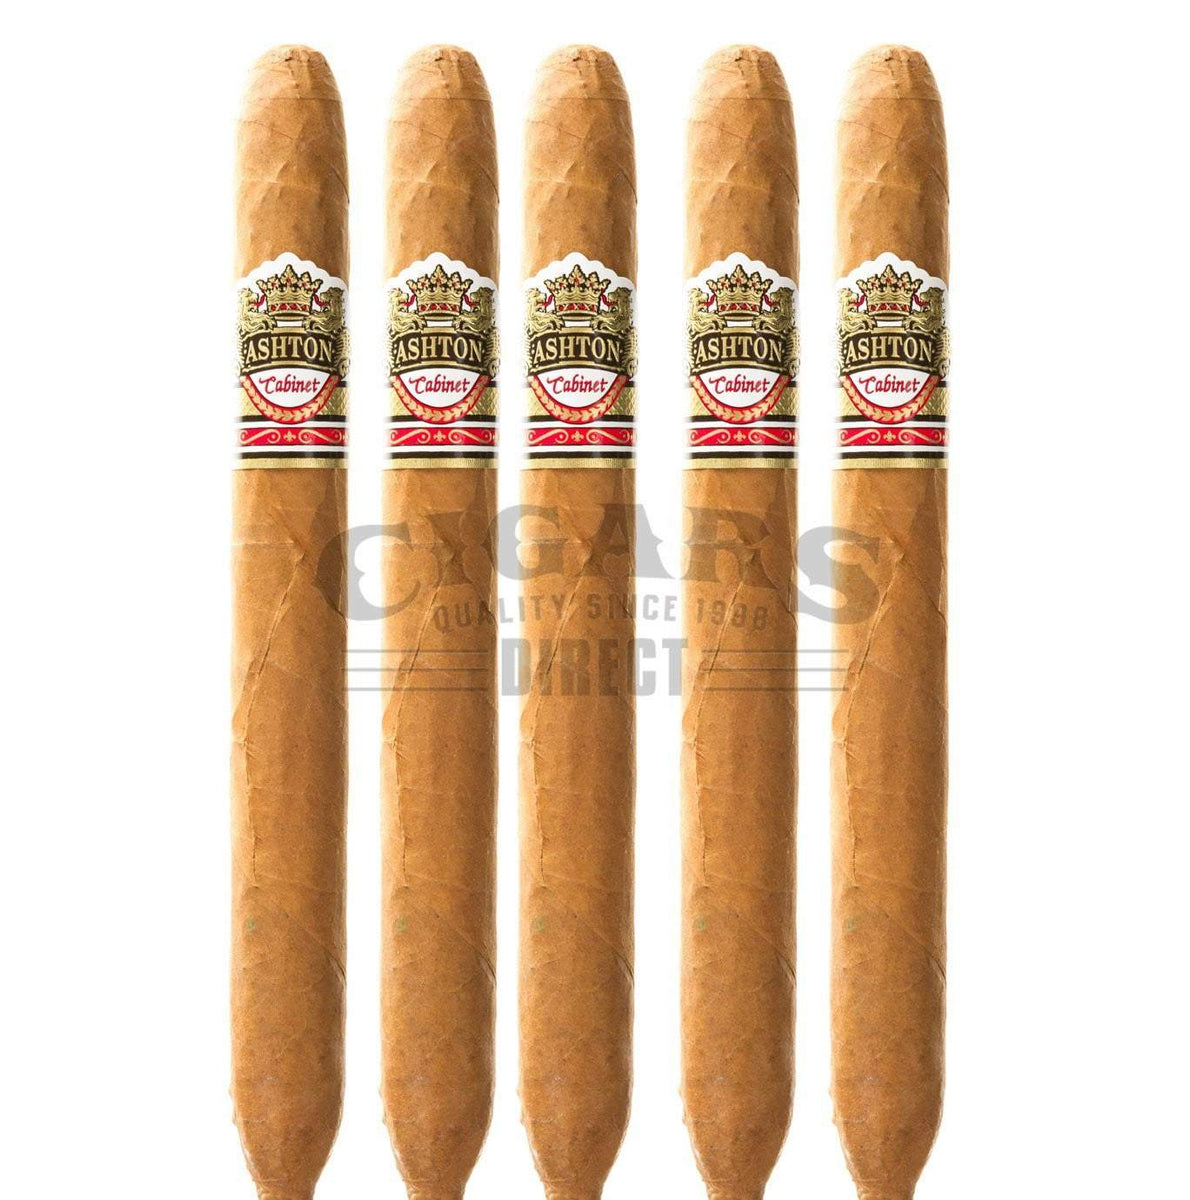 Ashton Cabinet Series No 2 Cigars Buy At Discount Prices Cigars